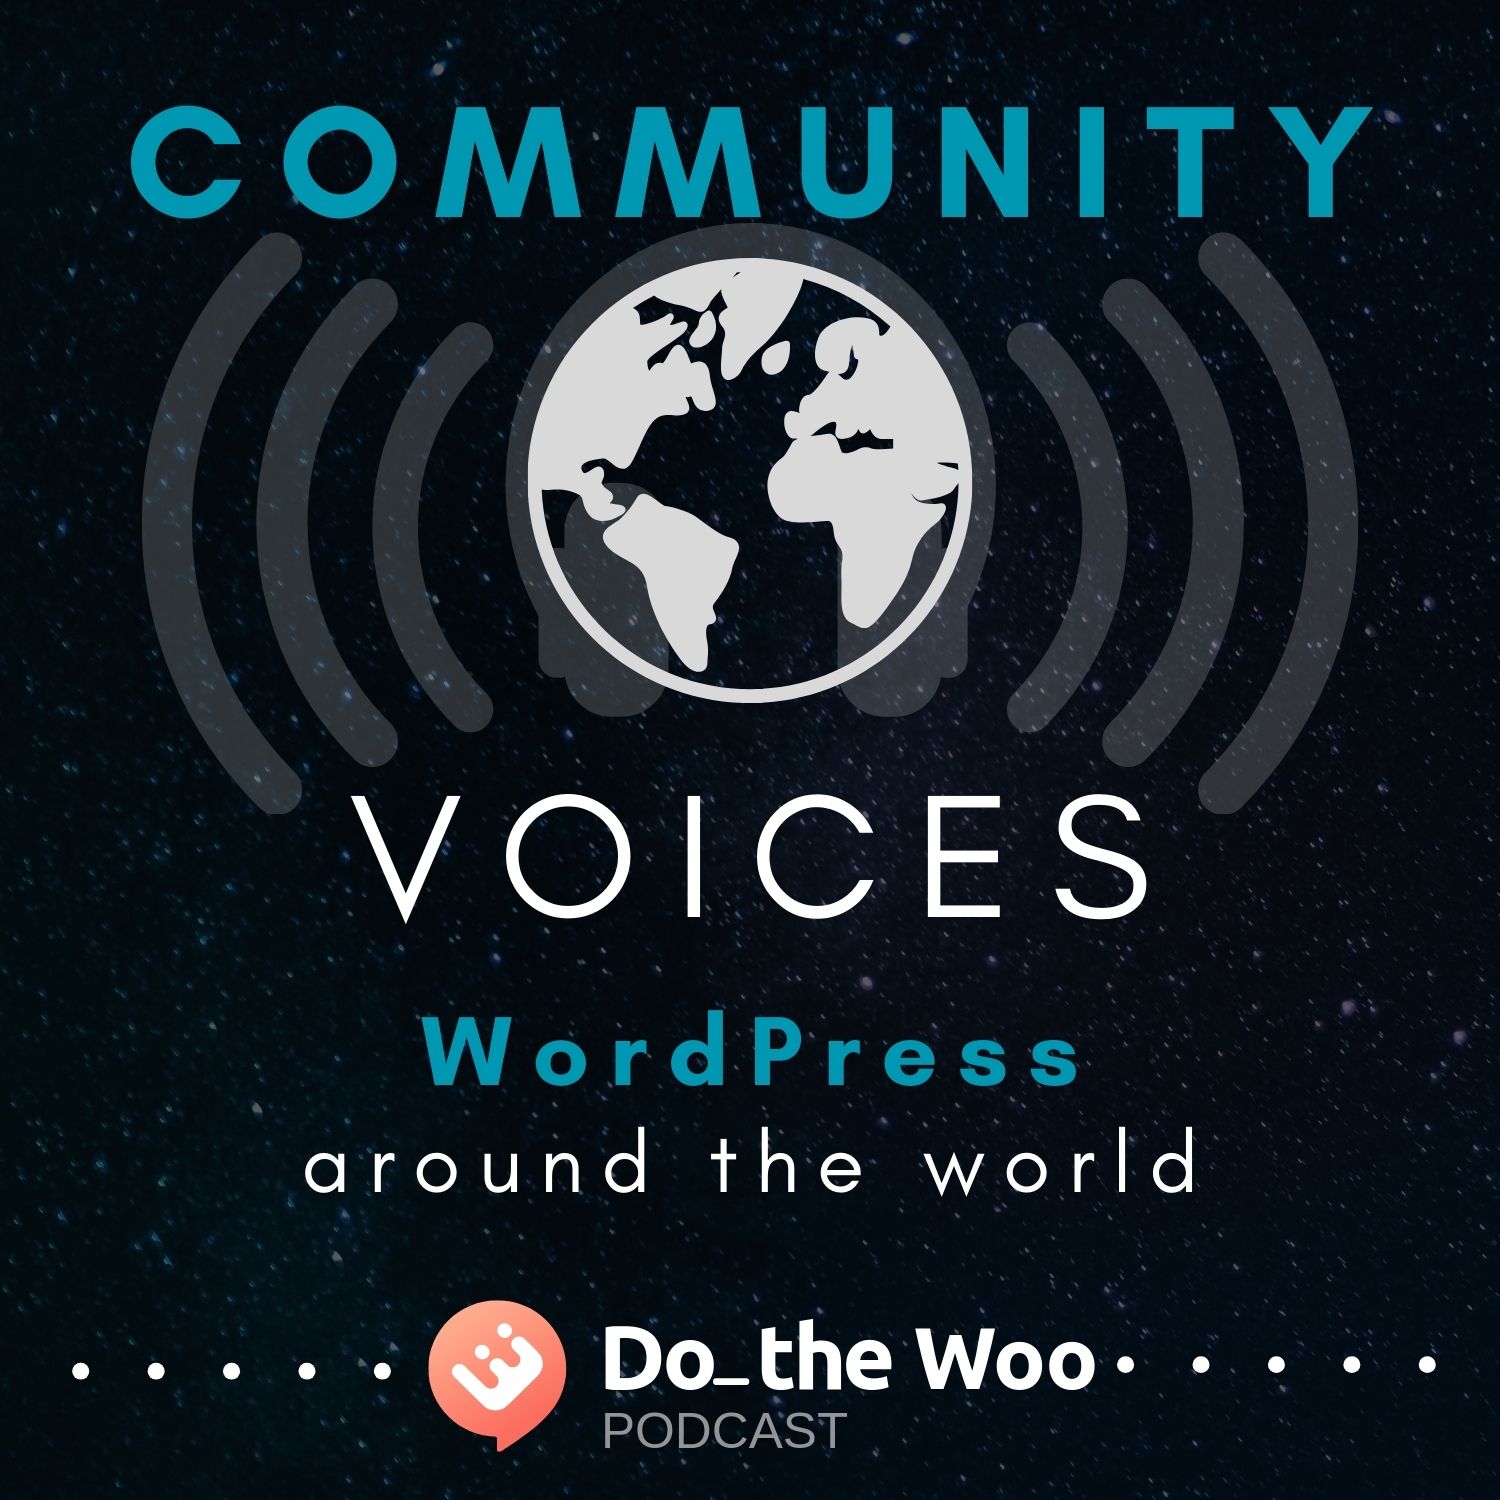 A Comunidade Portugal do WordPress - The Portugal WordPress Community